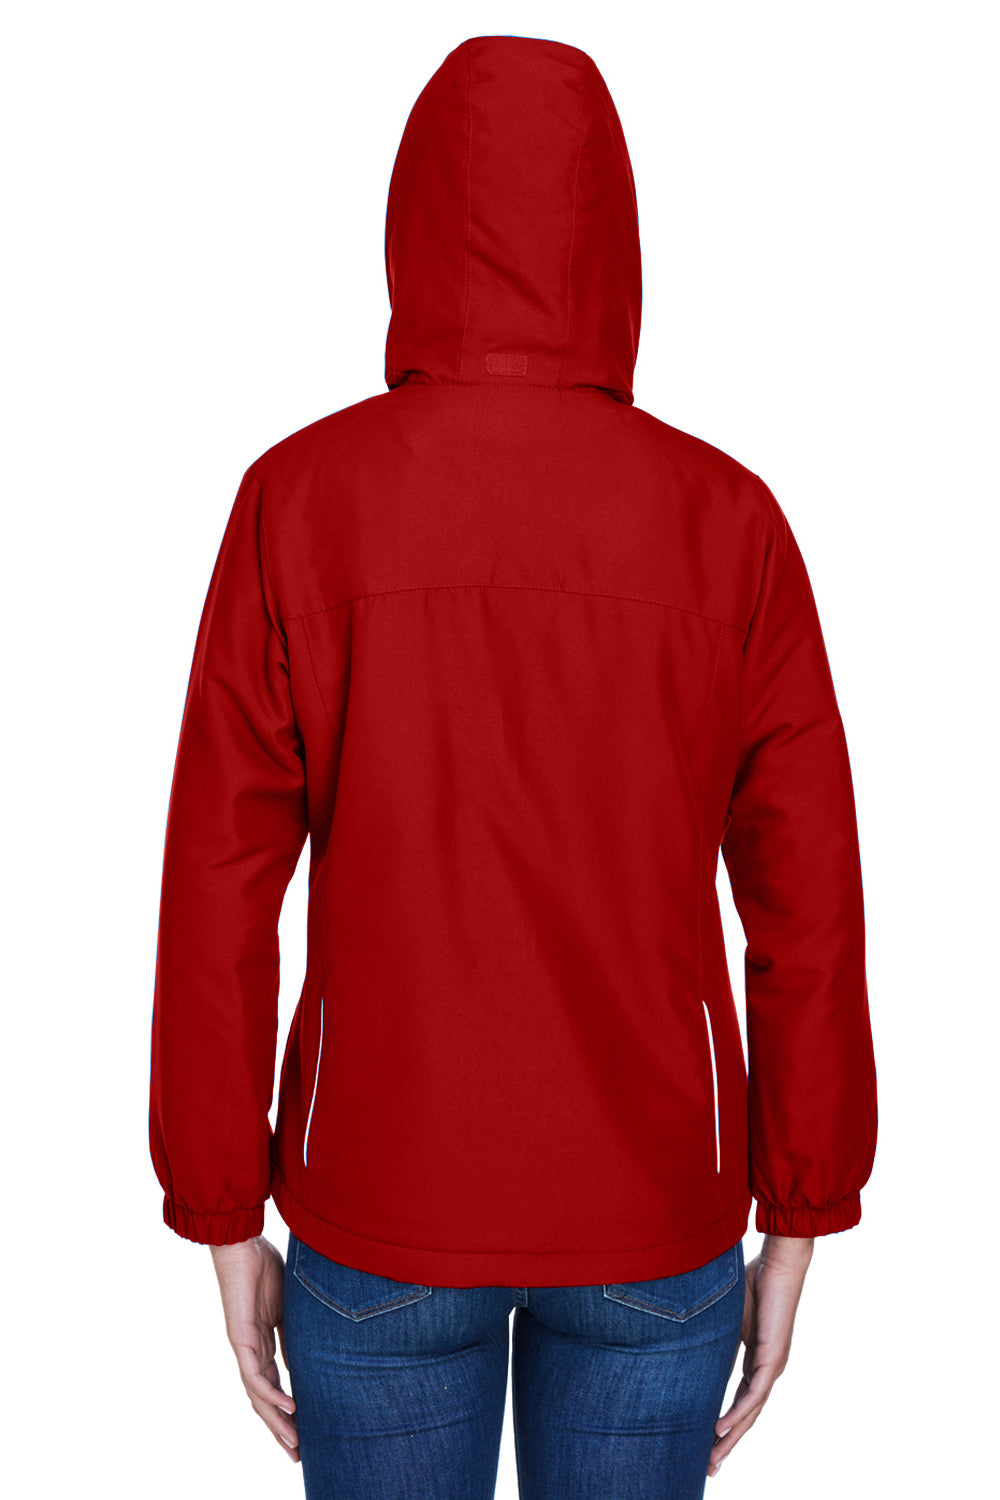 Core 365 78189 Womens Brisk Full Zip Hooded Jacket Red Back